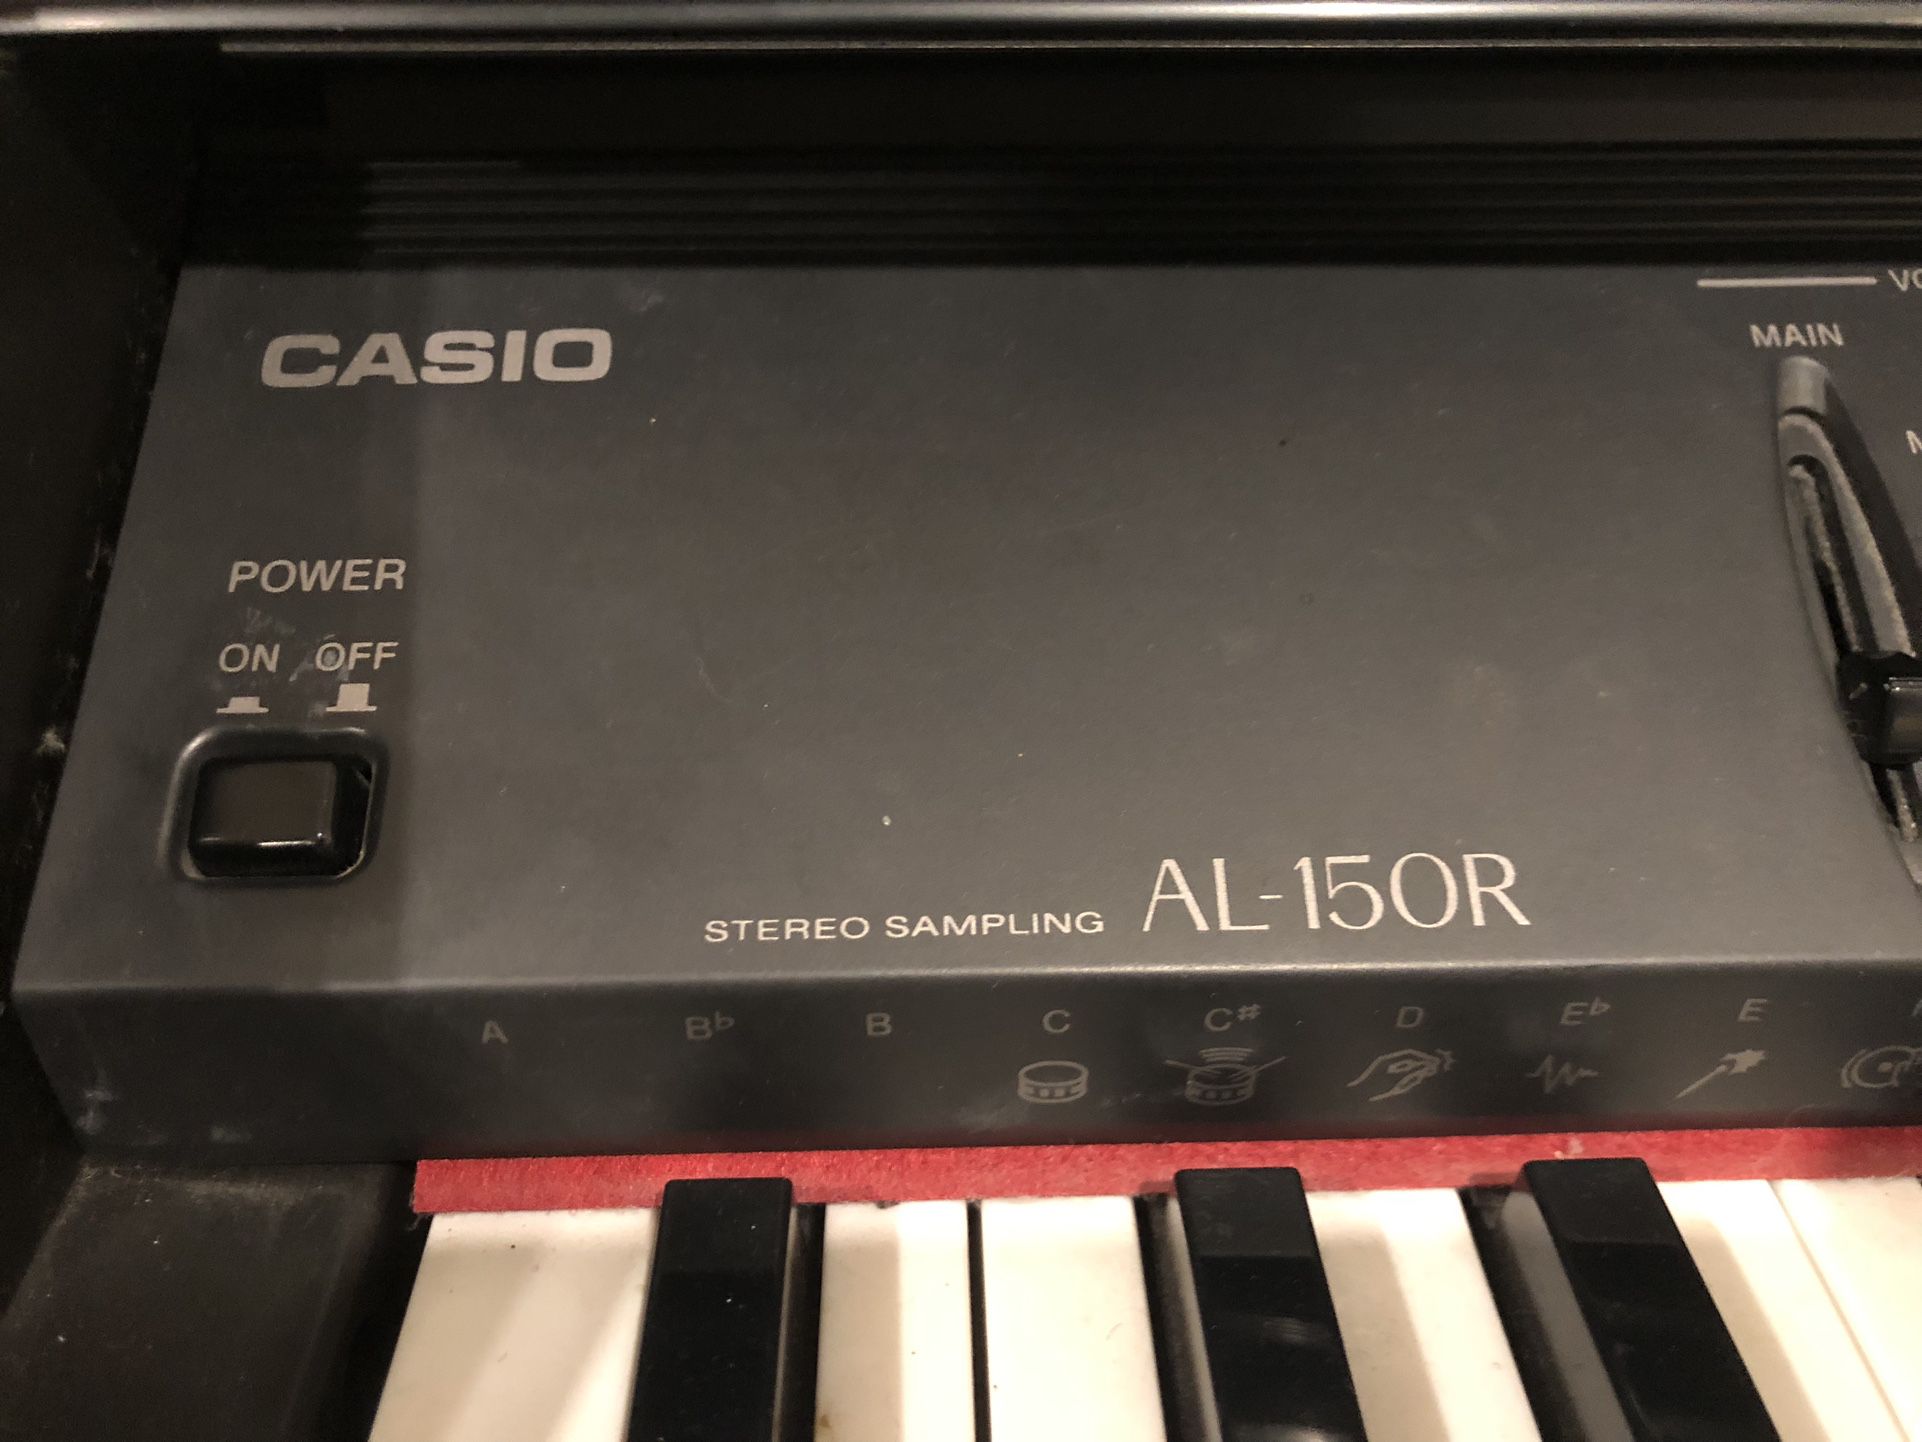 Digital Grand Piano- Casio 